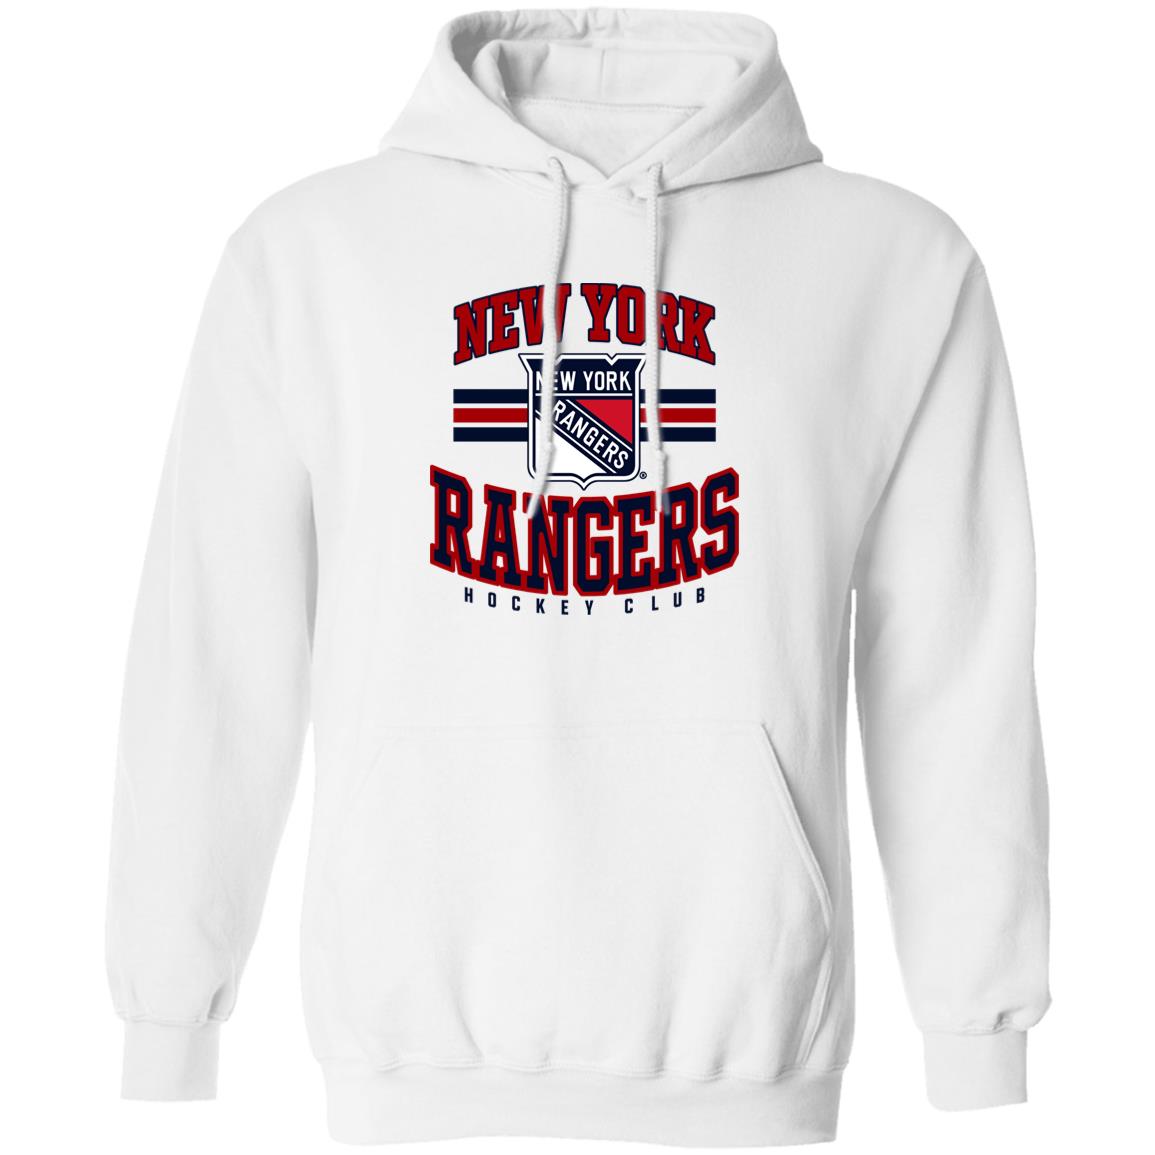 New York Rangers Hockey Club Shirt 1